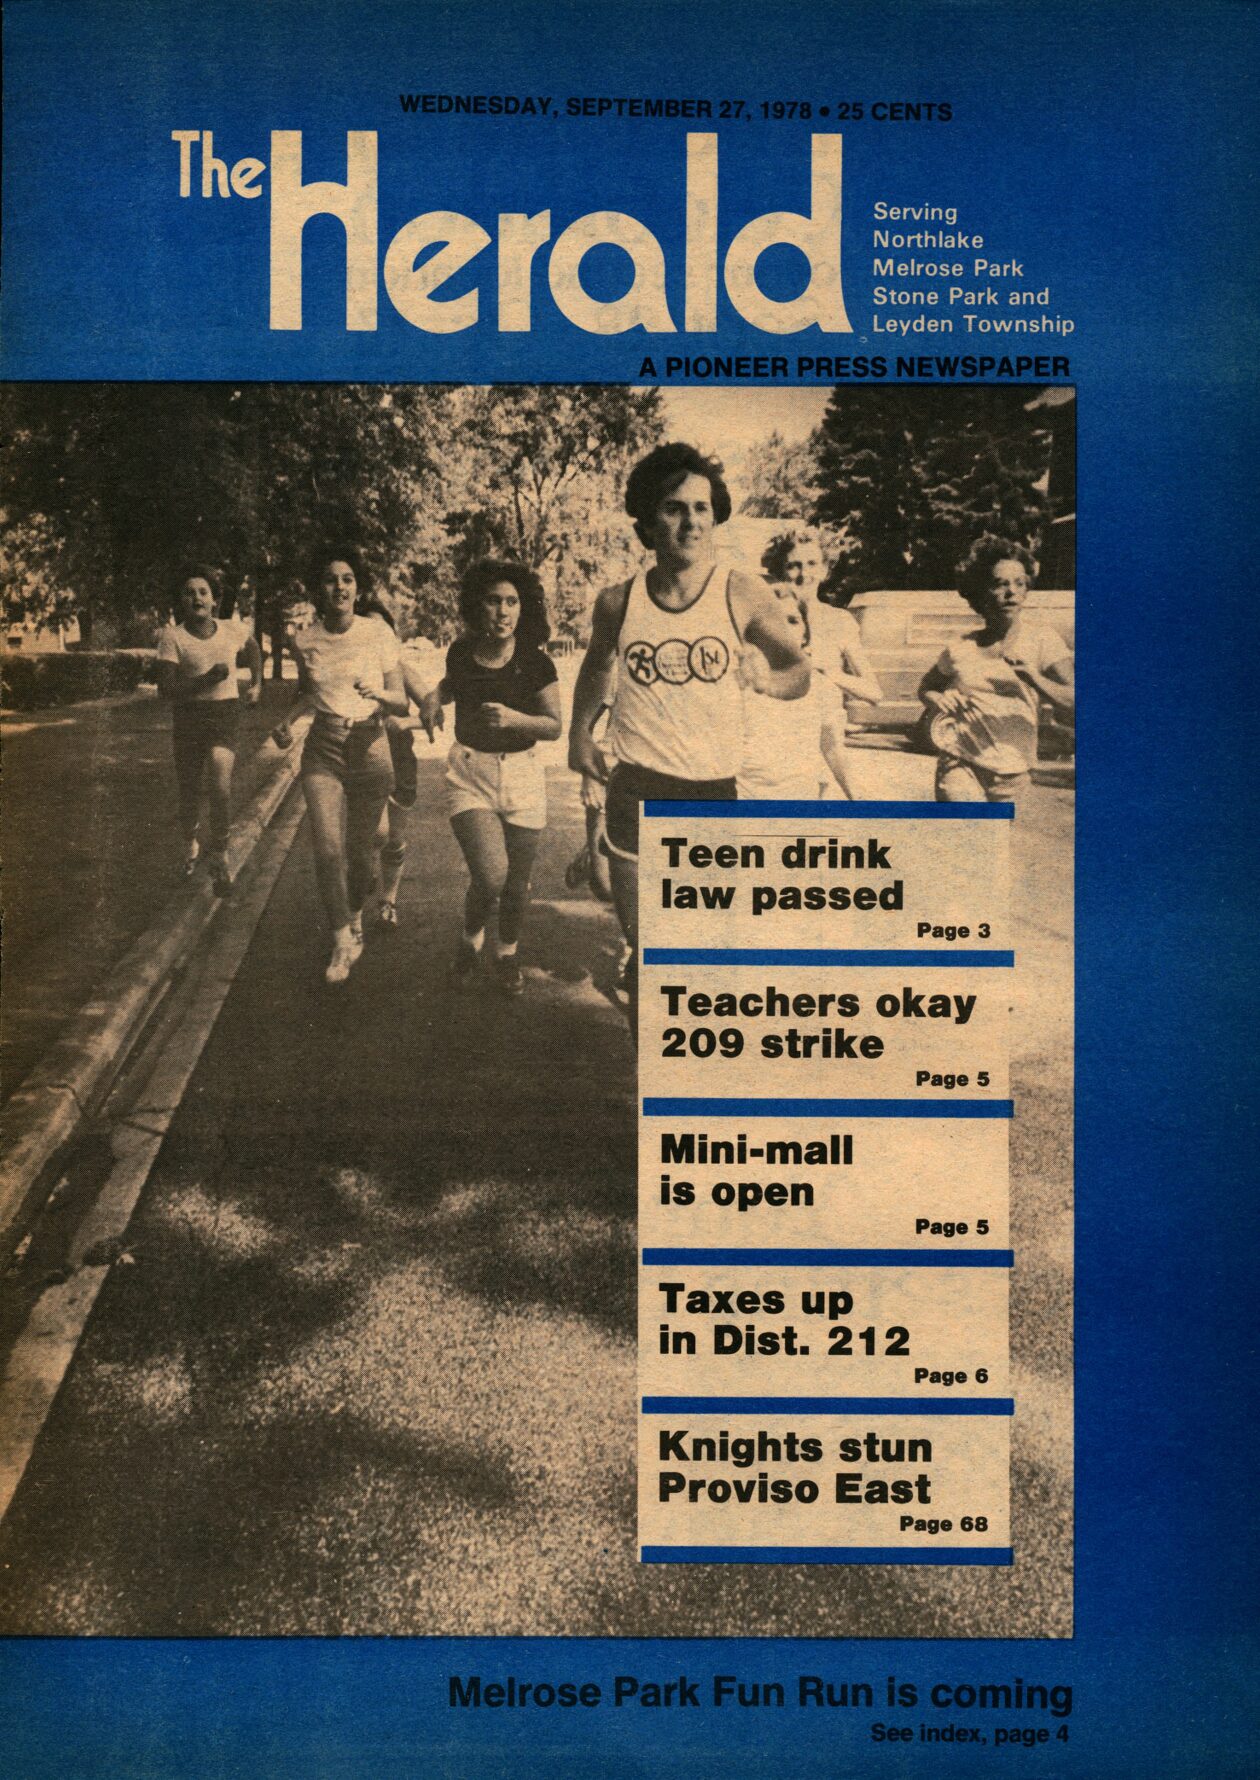 The Herald – 19780927